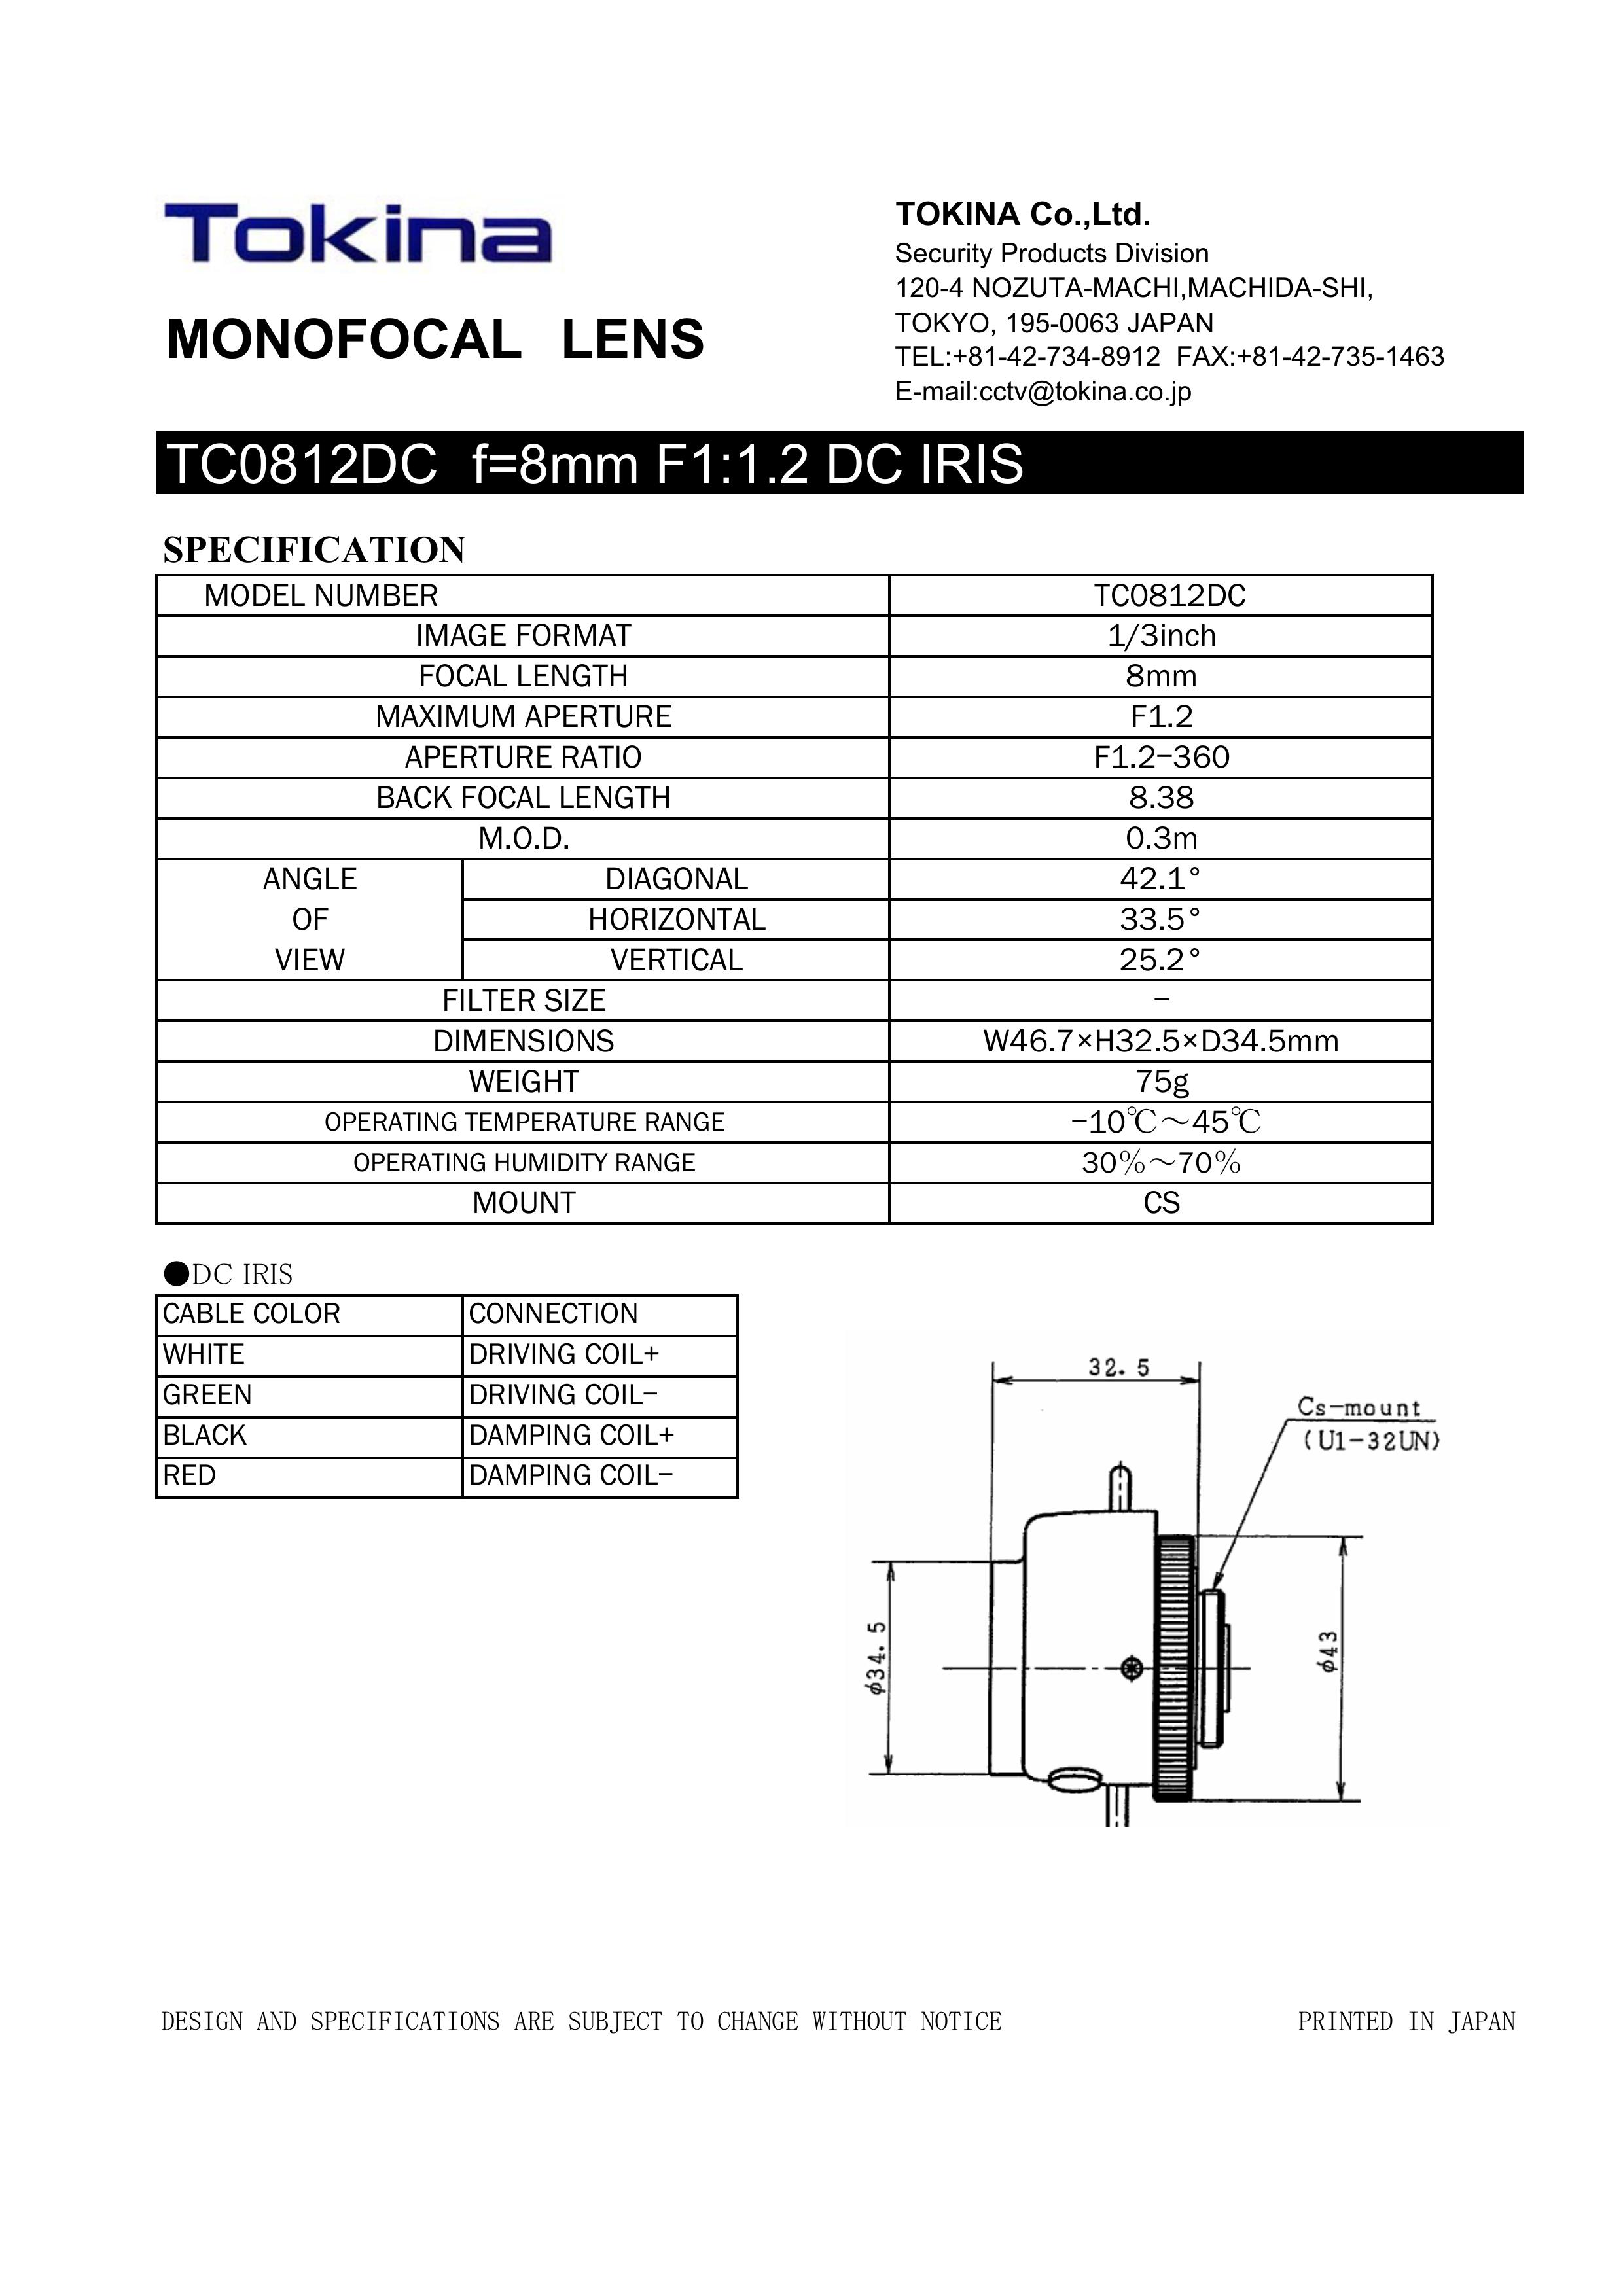 Tokina TC0812DC Camera Accessories User Manual